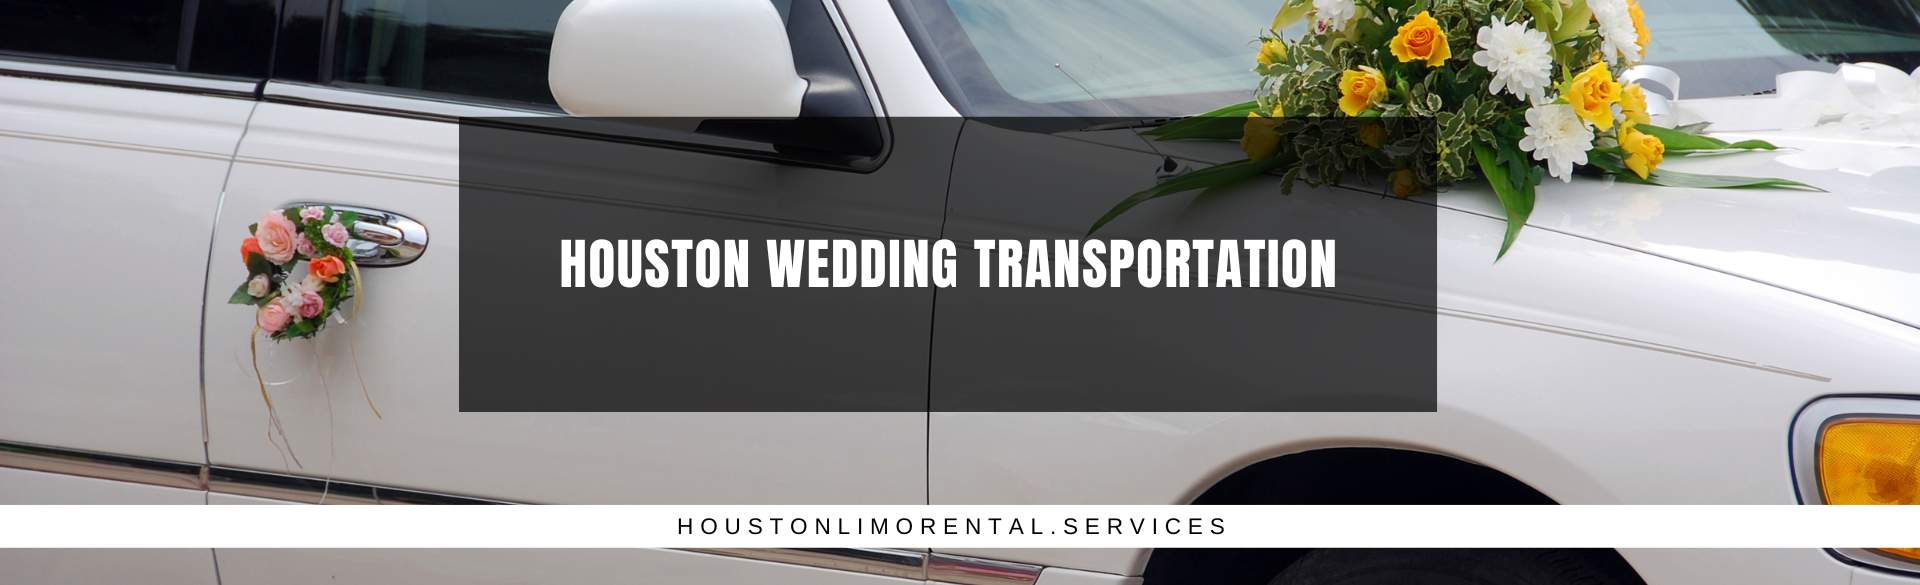 Houston Wedding Transportation